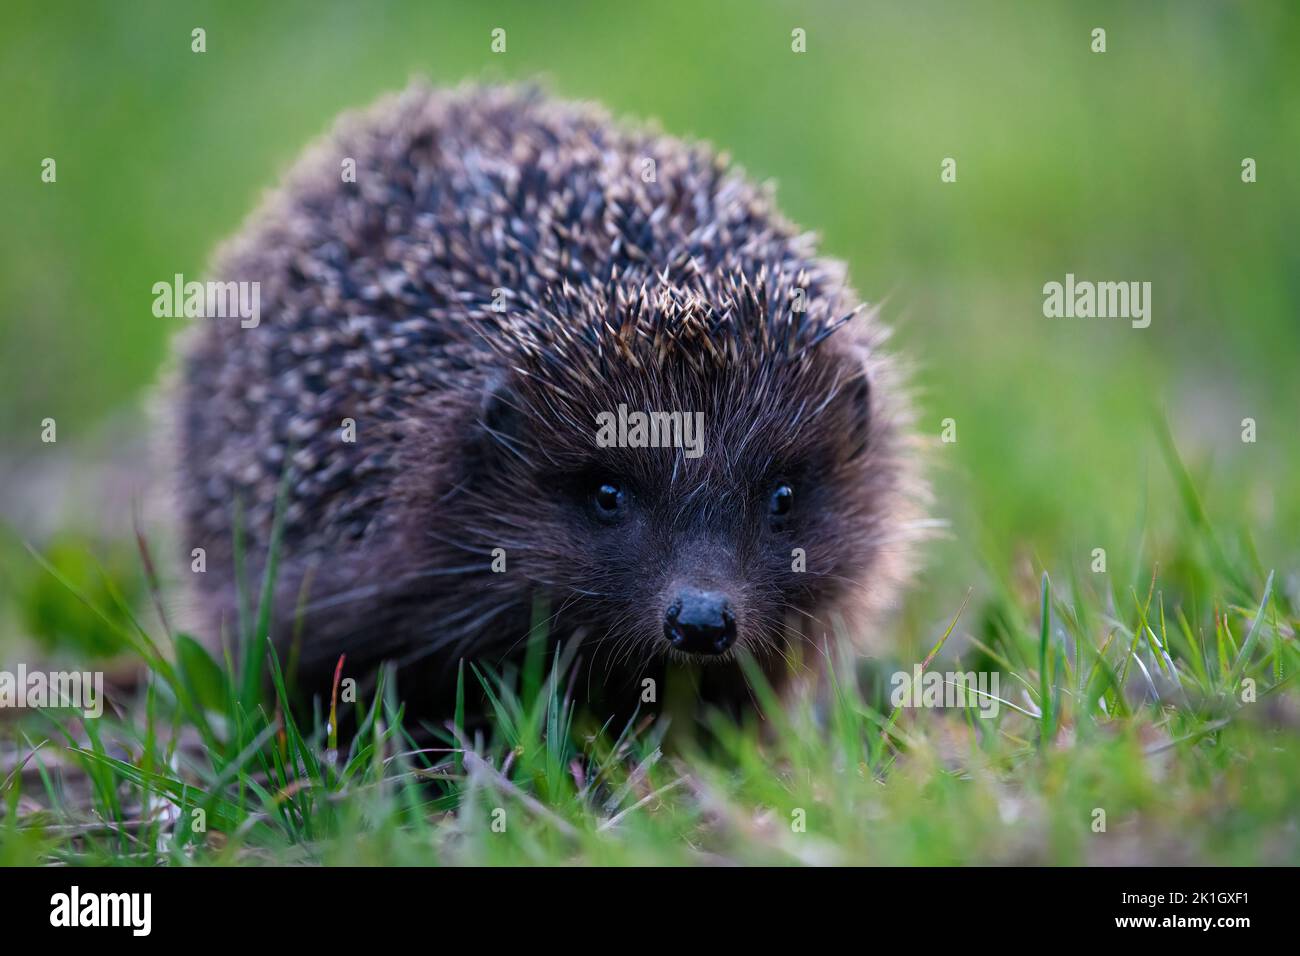 Hedgehog in green grass. Wildlife scene from nature. Animal in natural garden habitat Stock Photo